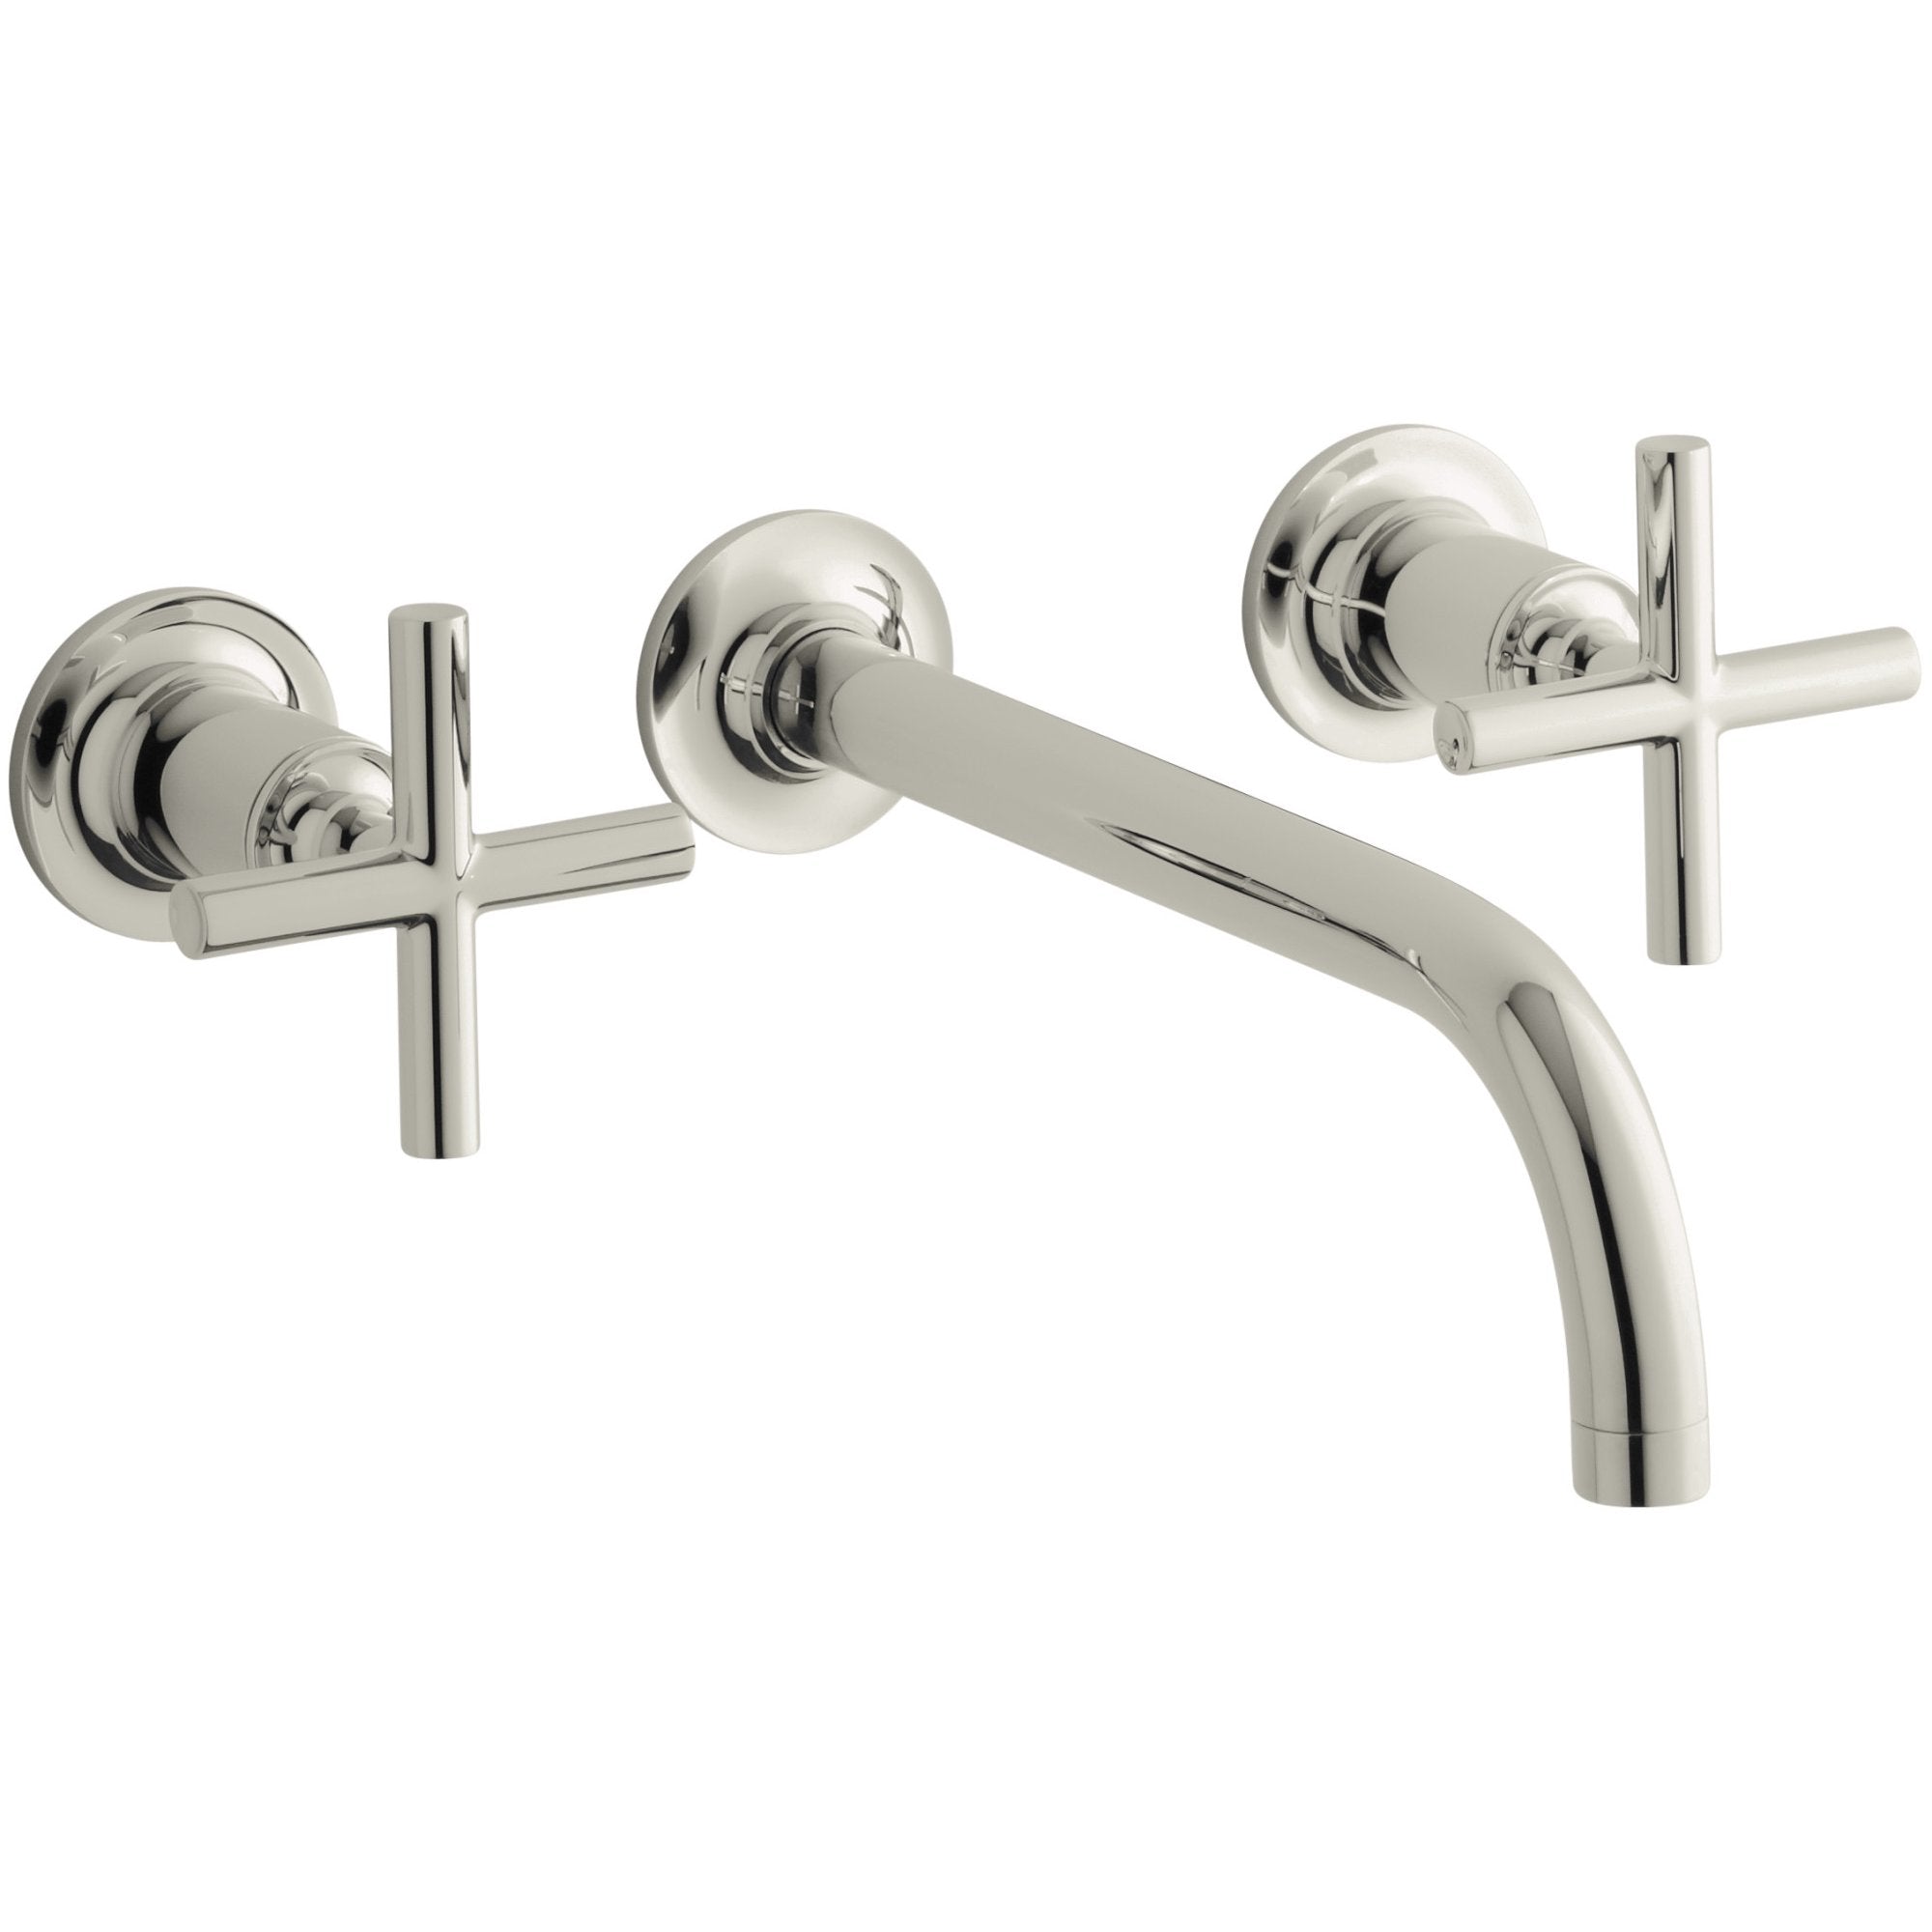 Kohler Purist Wall-Mount Bathroom Sink Faucet Trim - Sleek Design, High Quality